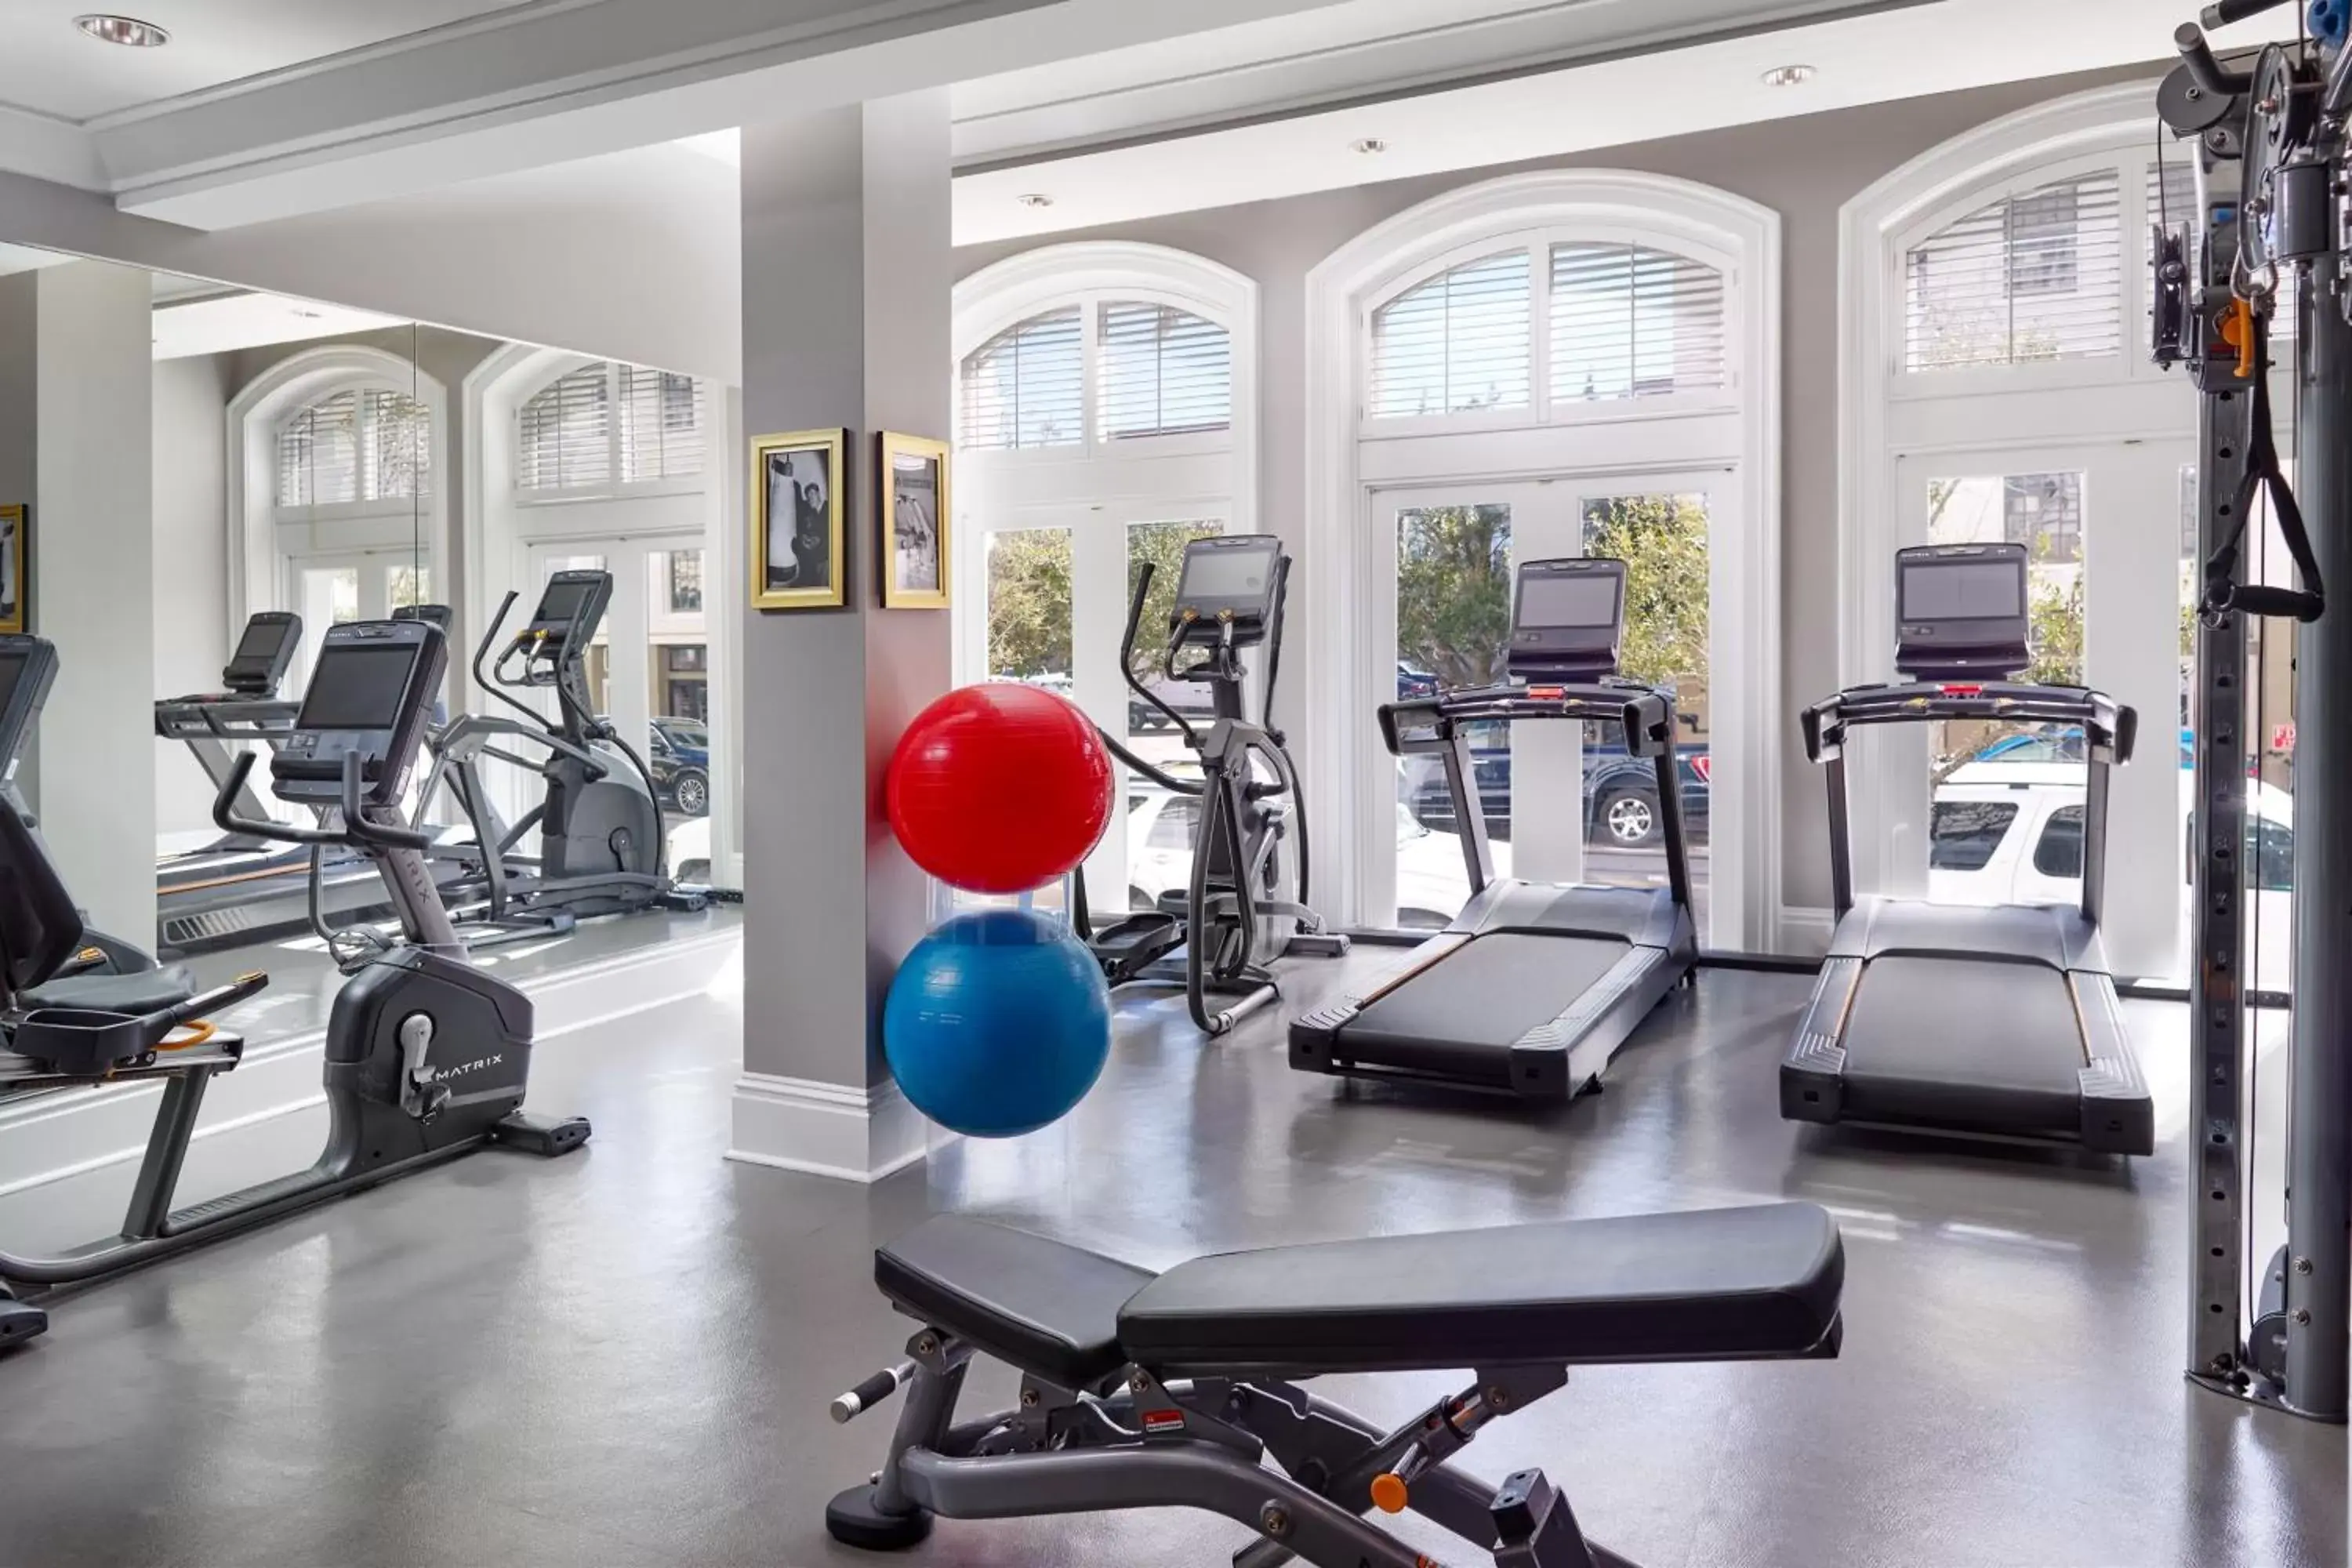 Fitness centre/facilities, Fitness Center/Facilities in The Tremont House, Galveston, a Tribute Portfolio Hotel